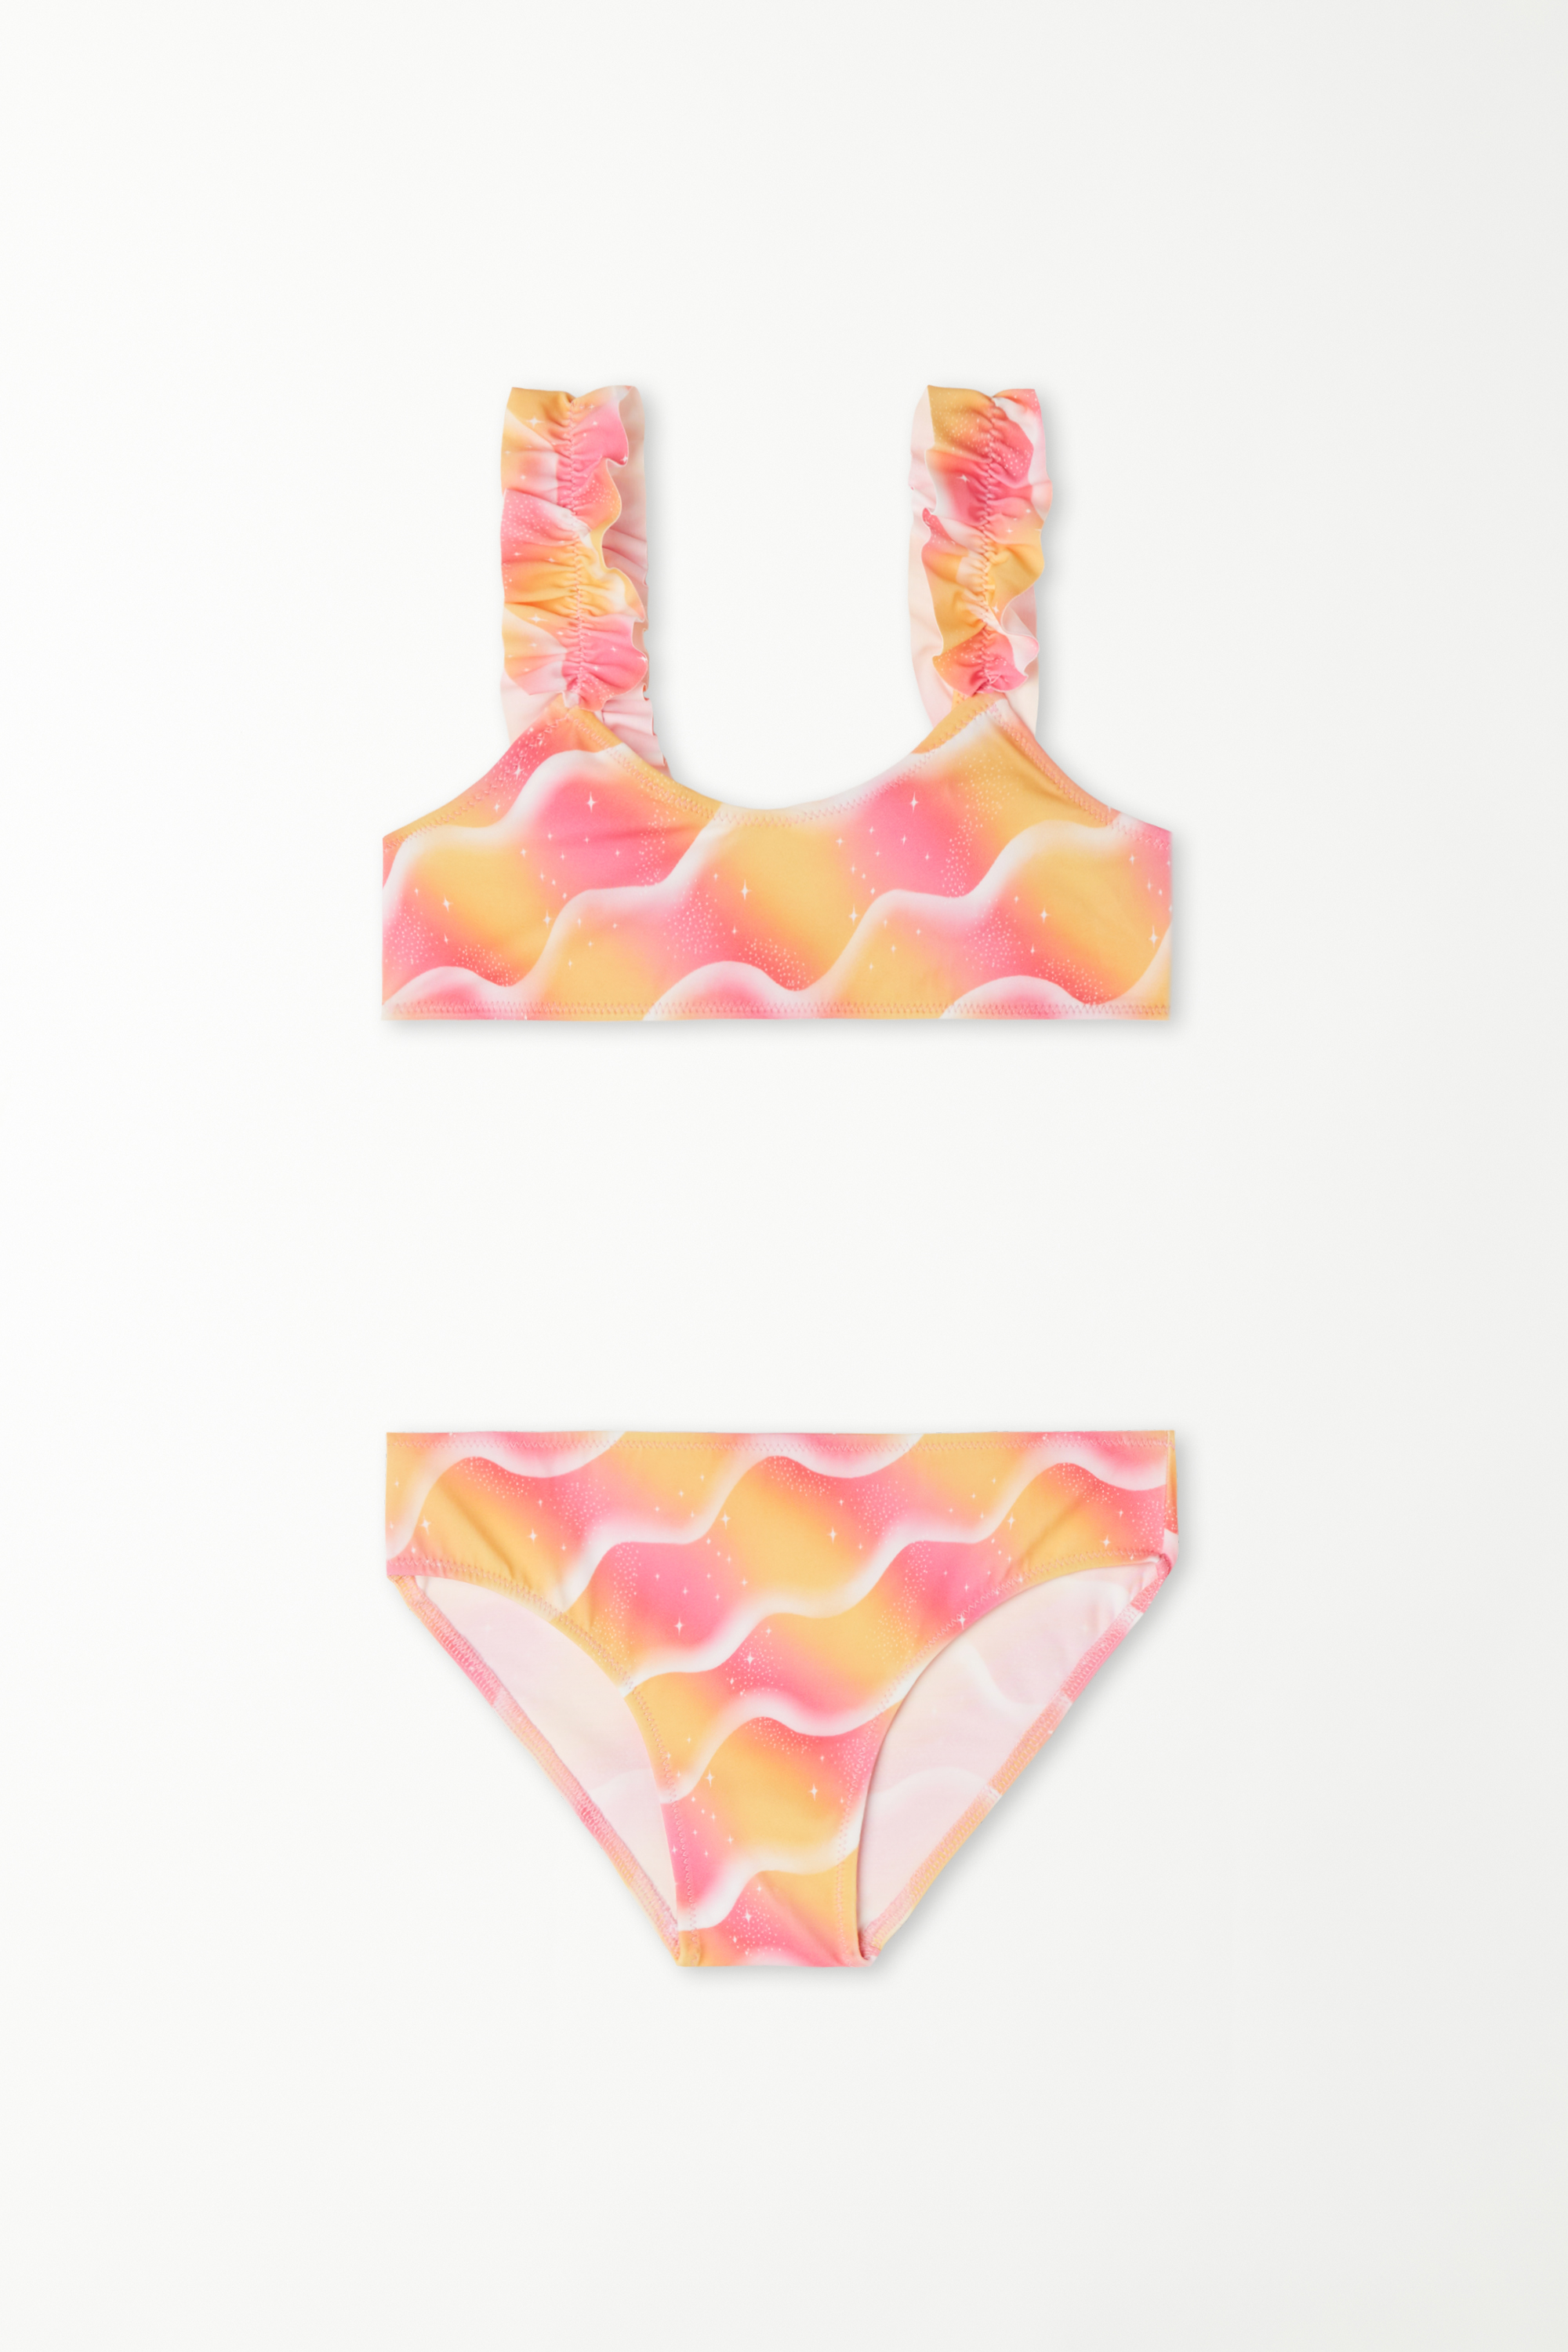 Girls’ Mermaid Print Ruched Bikini Top and Bottoms